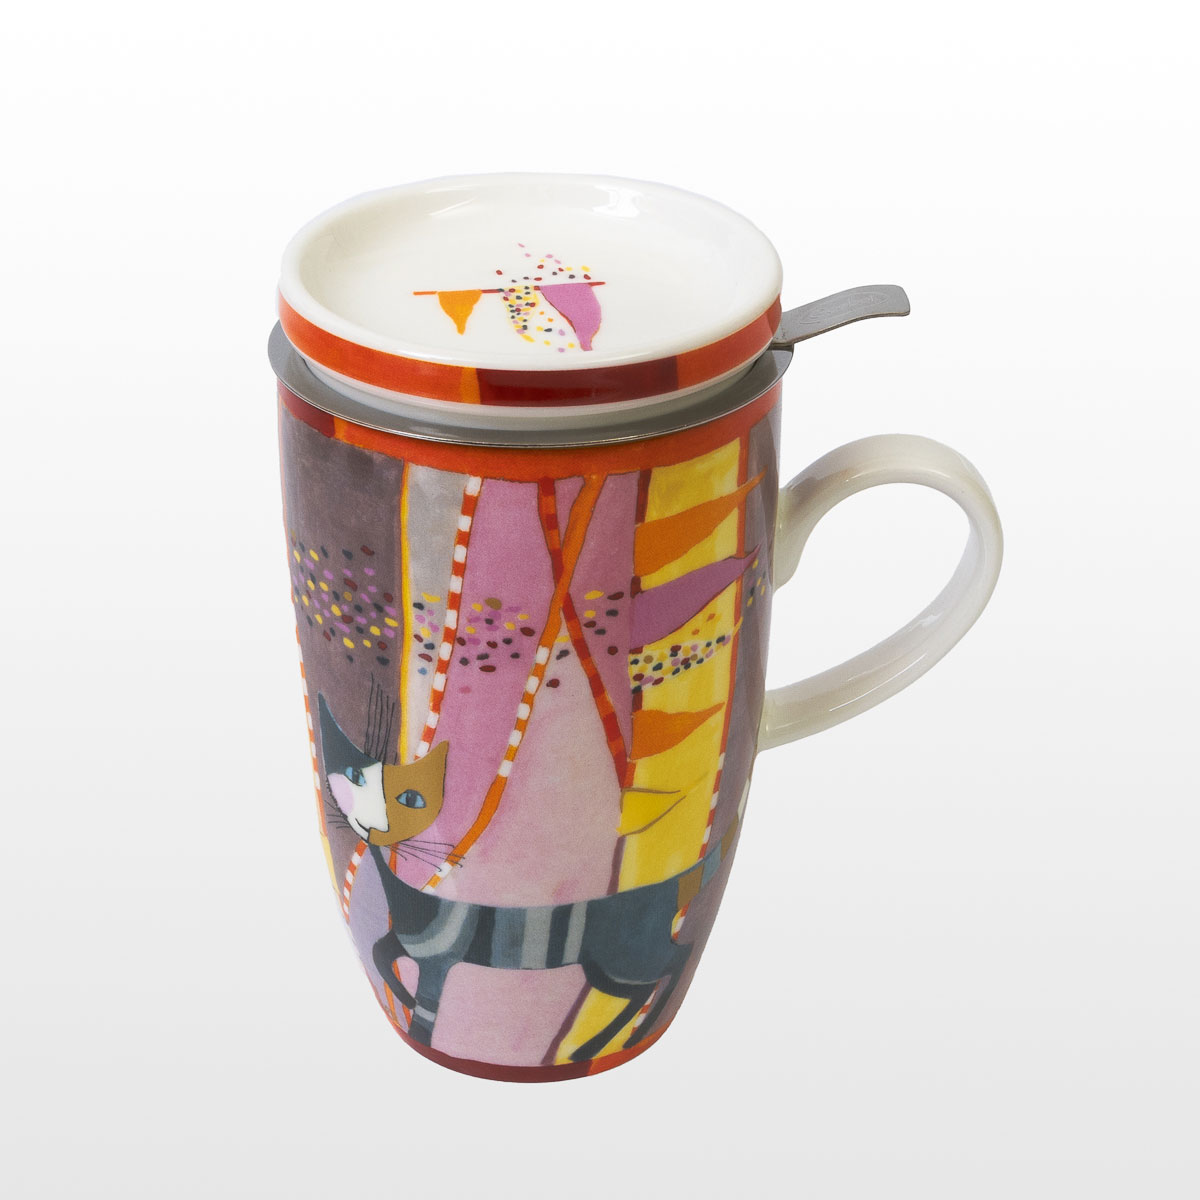 Rosina Wachtmeister tea mug : Sottosopra (with filter), detail 5